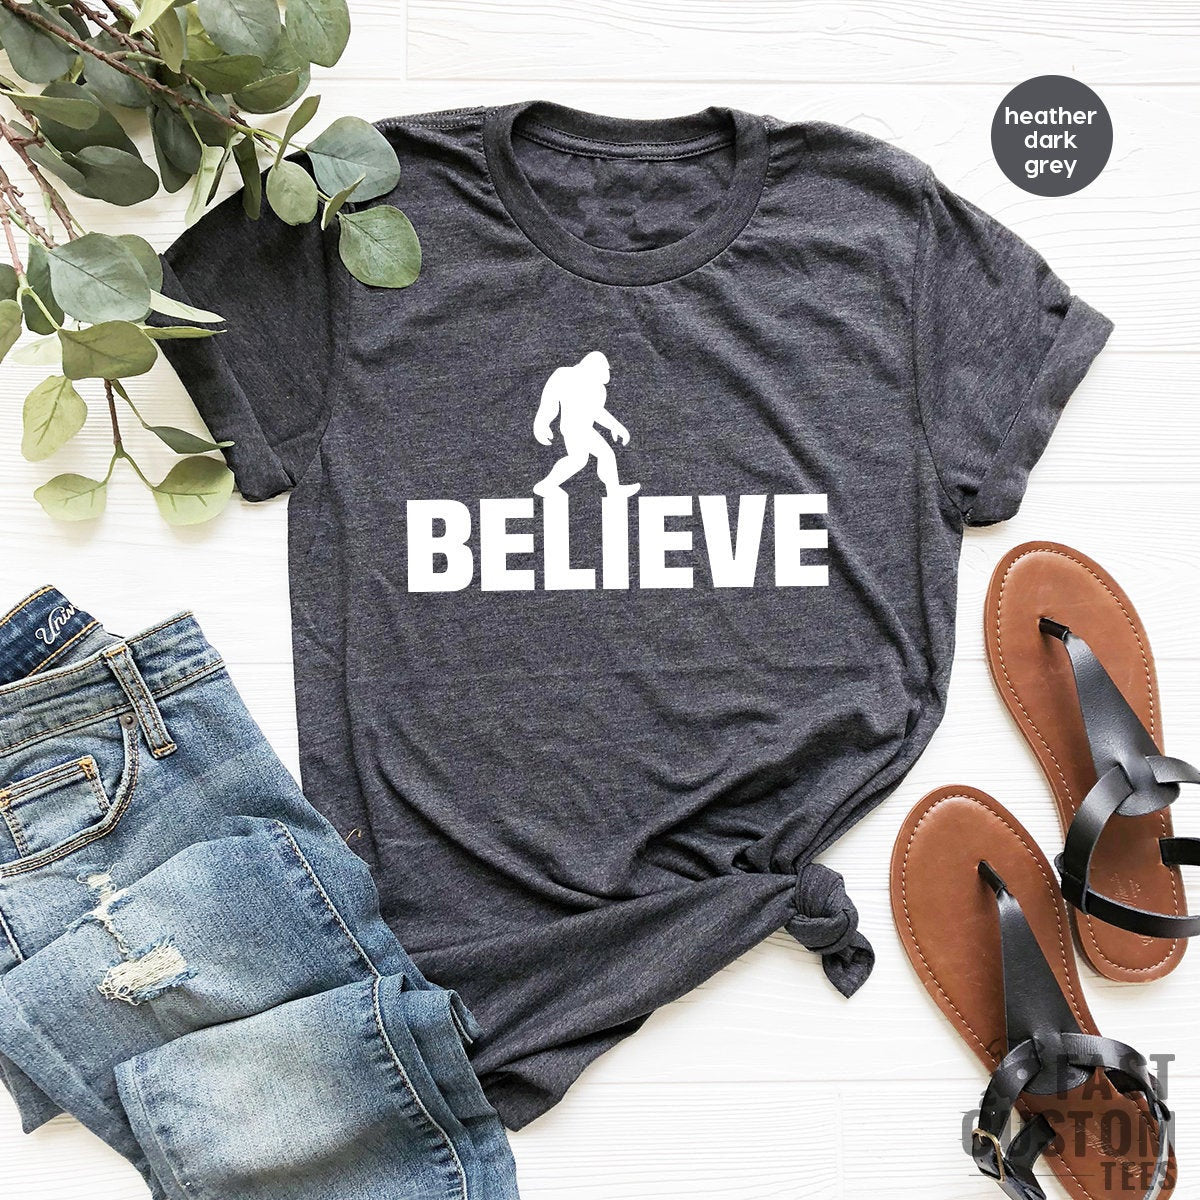 Believe Bigfoot Shirt, Sasquatch TShirt, Funny Sasquatch Shirt, Bigfoot Search Team Shirt, Sasquatching Shirt, Bigfoot Camping Shirt - Fastdeliverytees.com